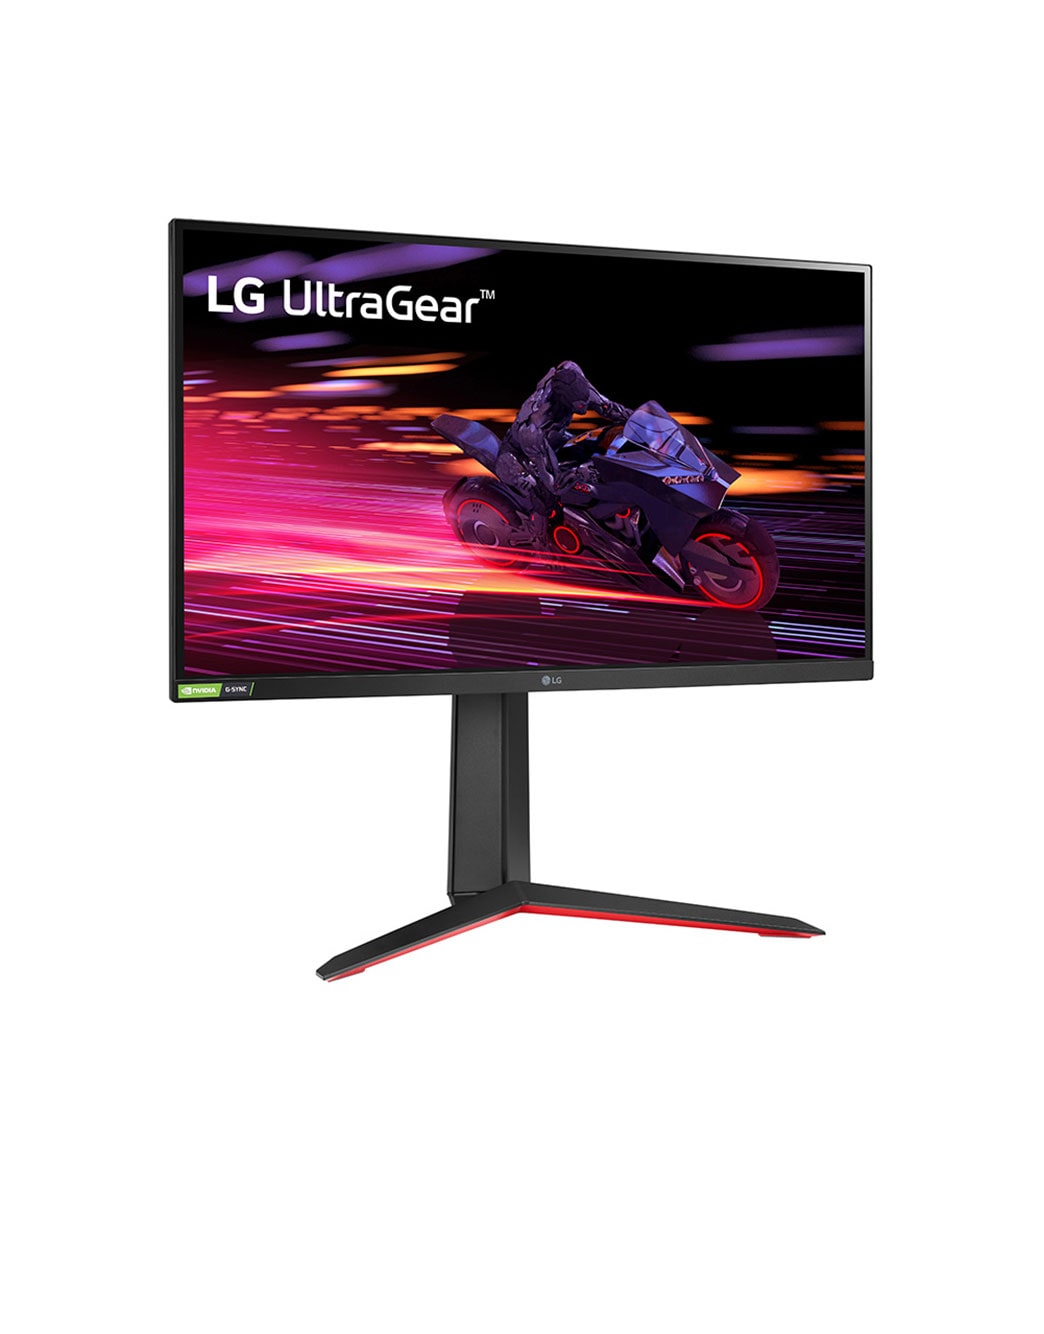 LG Monitor para juegos UltraGear ™ Full HD 240Hz IPS 1ms (GtG) de 27''  compatible con NVIDIA® G-SYNC®